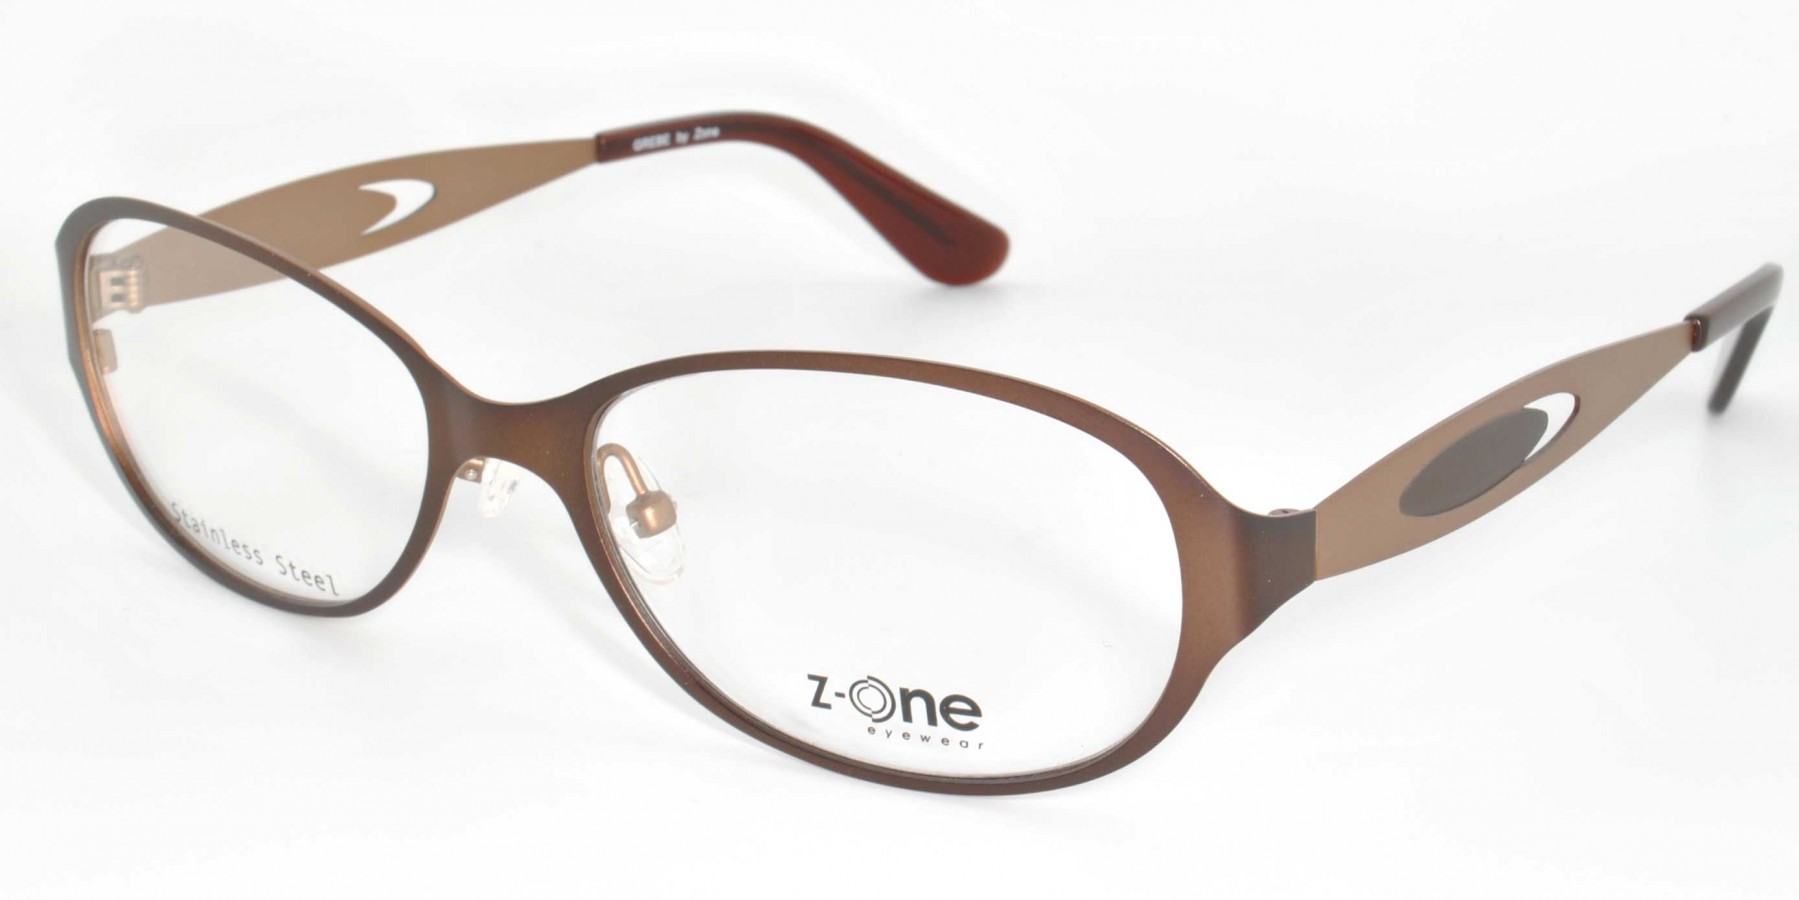 Z-One Grebe Prescription Glasses